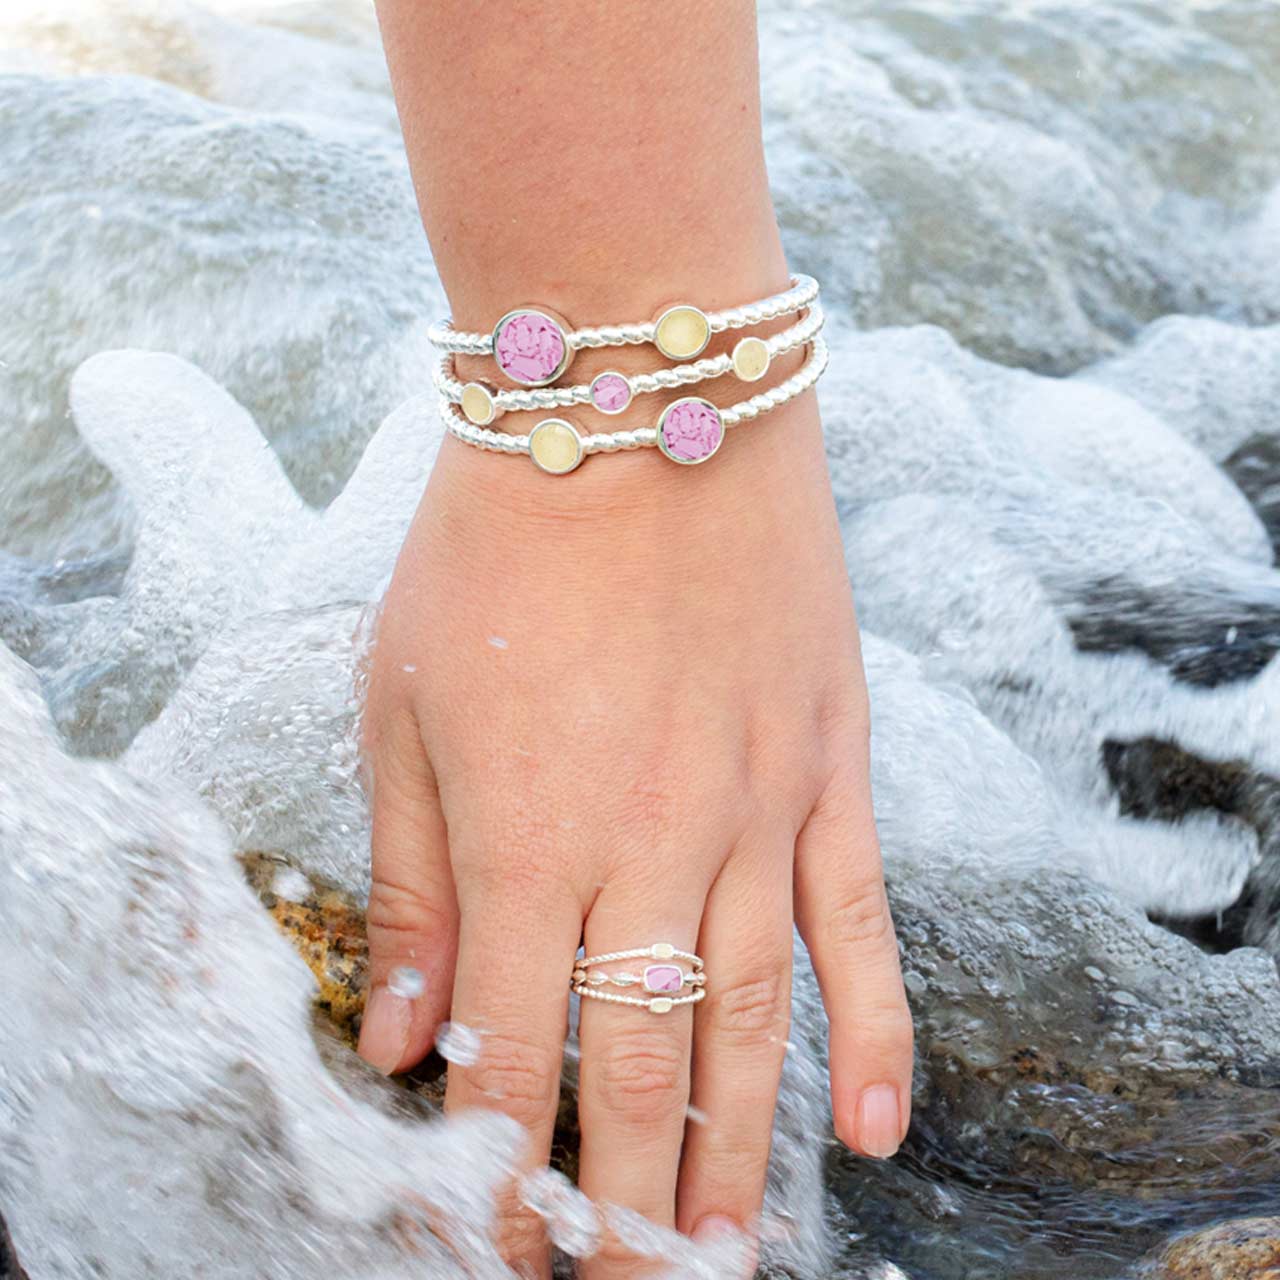 Dune Jewelry x 4ocean - Rope Seven Sand Cuff Bracelet - Florida